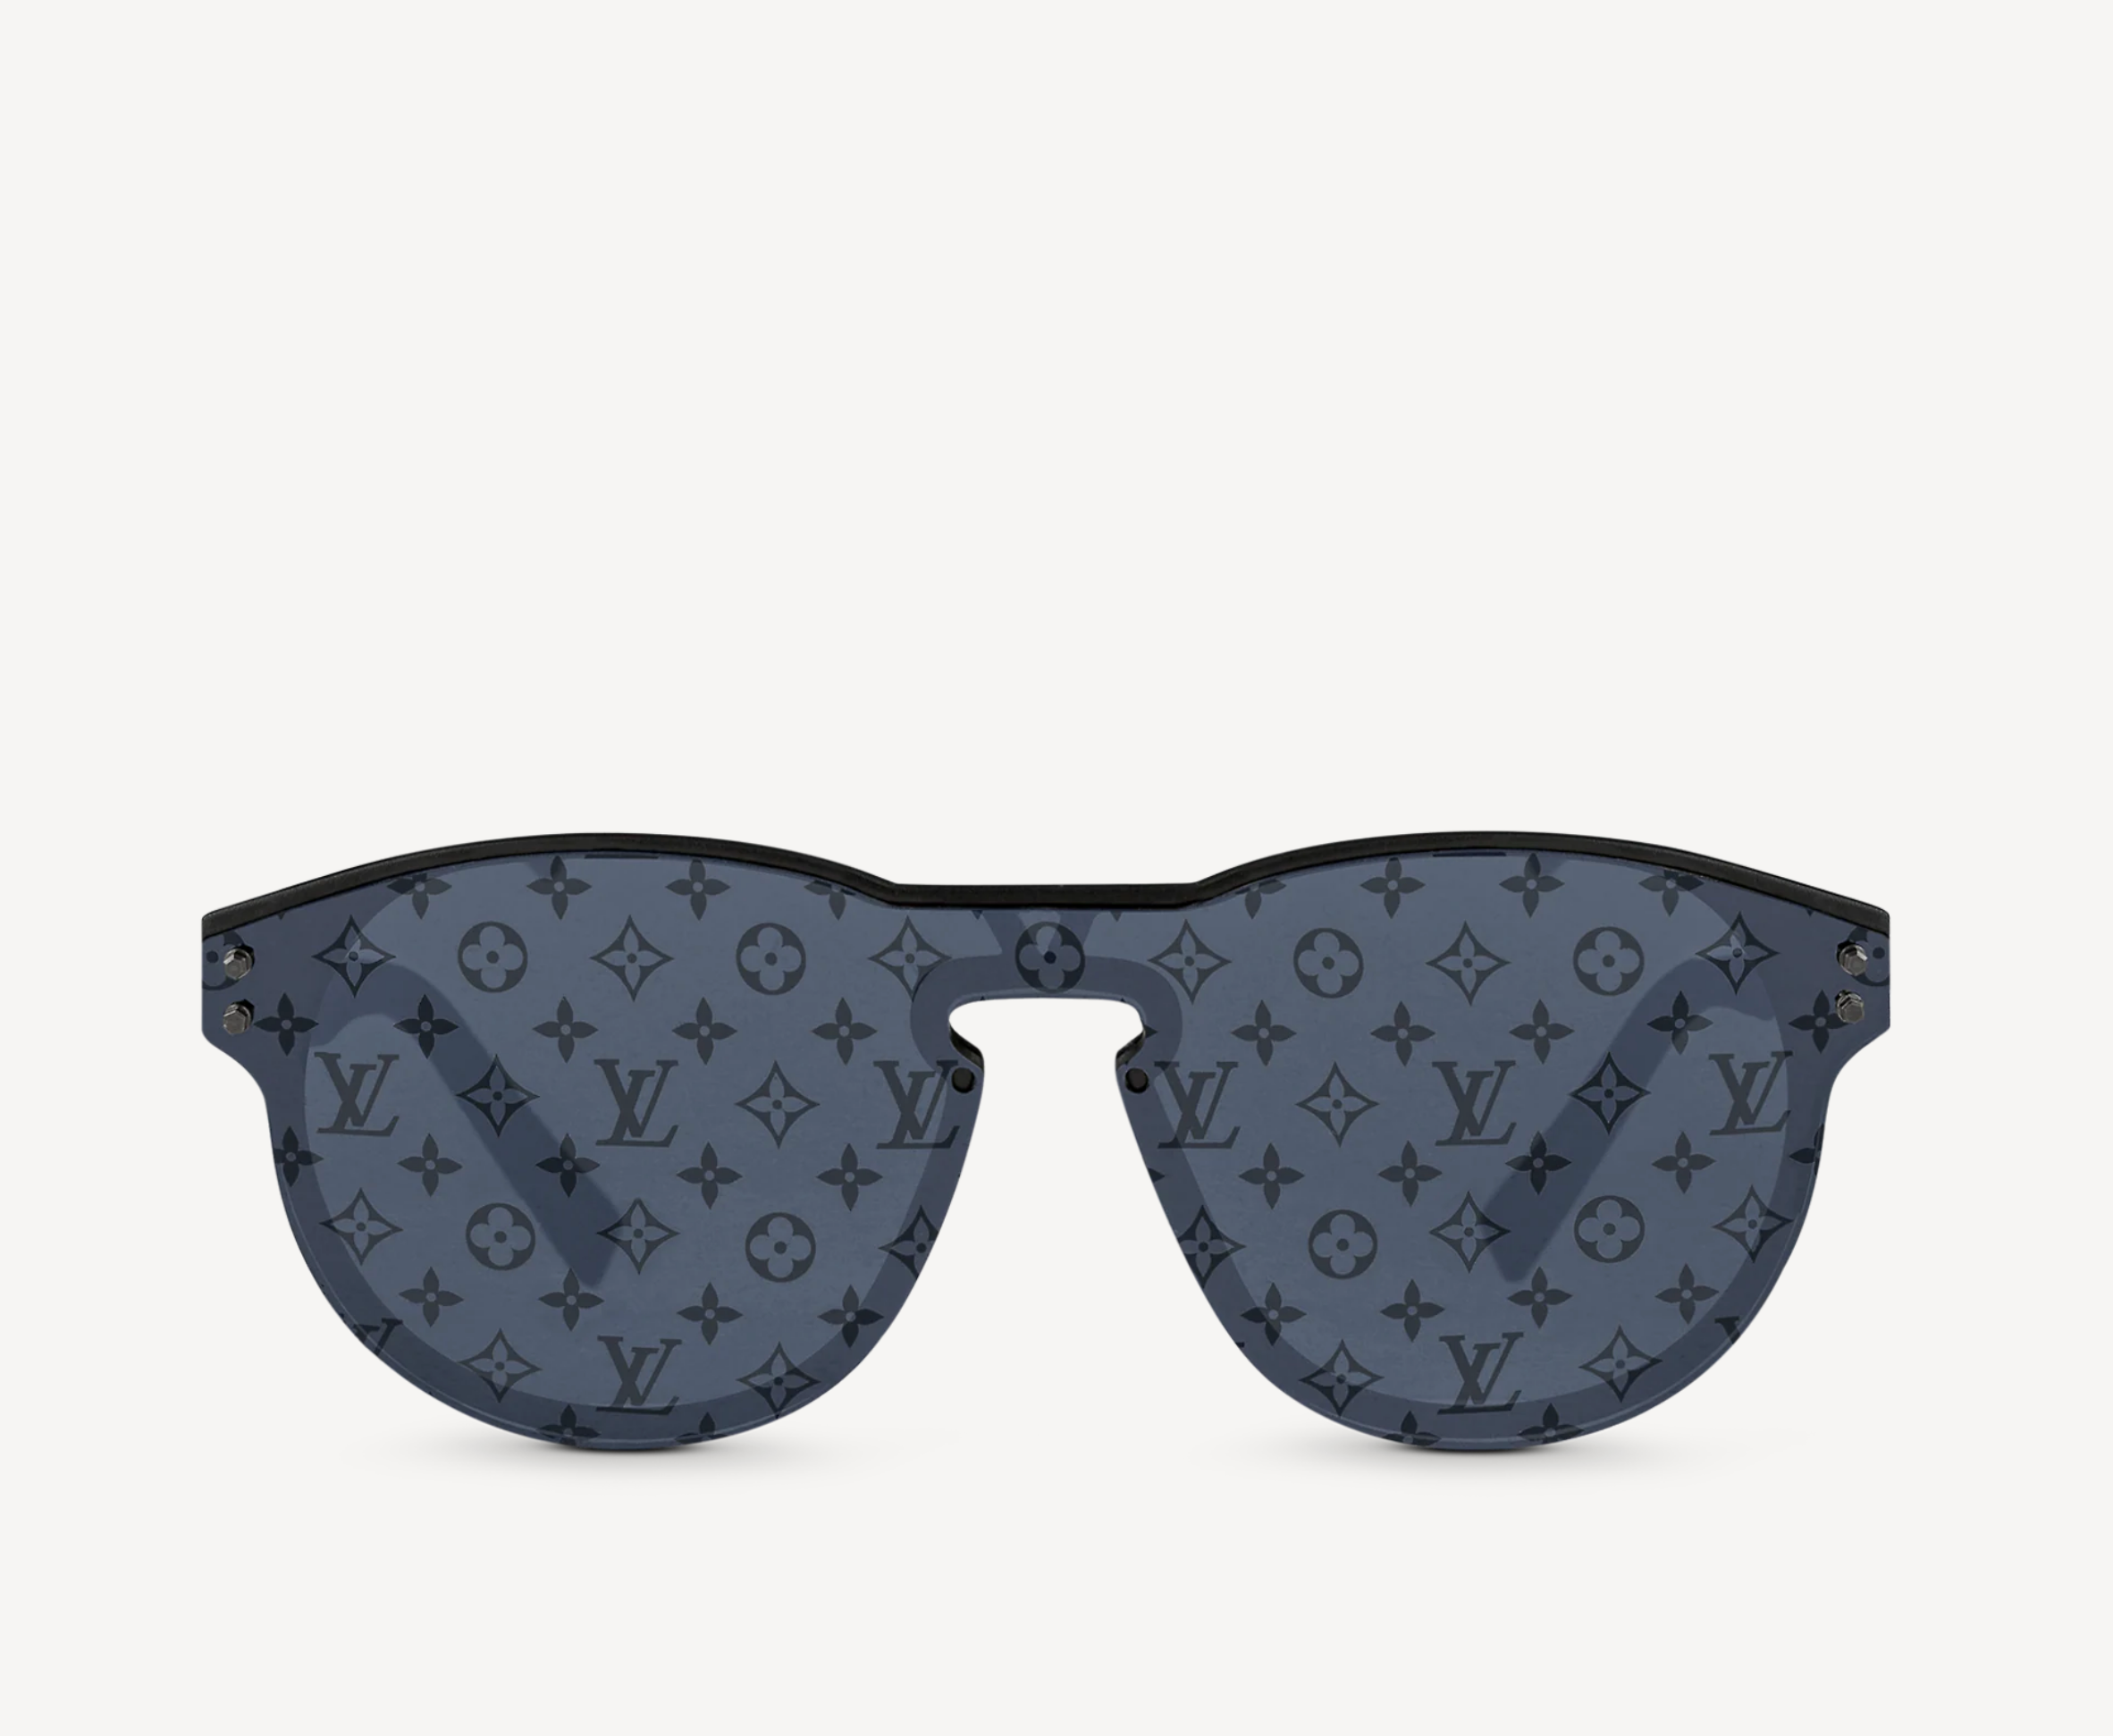 Louis Vuitton Men's Sunglasses for sale in Los Angeles, California